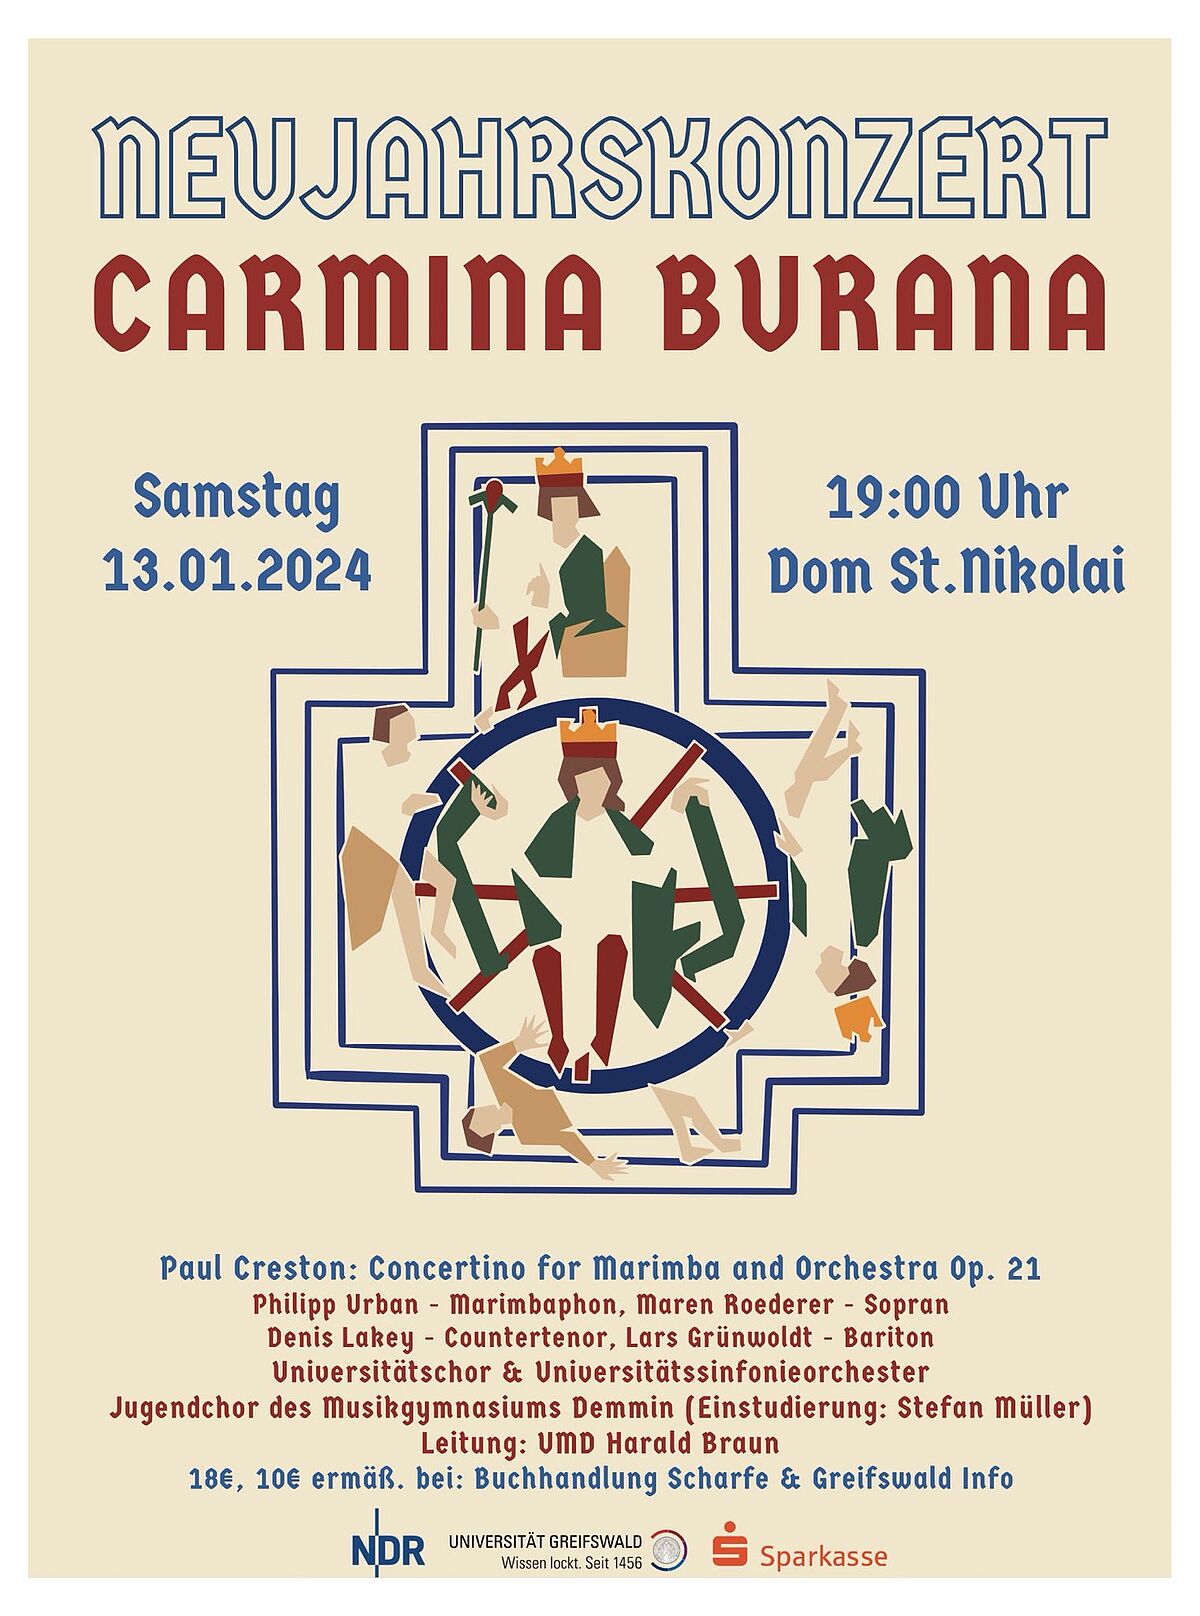 Plakat Neujahrskonzert Carmina